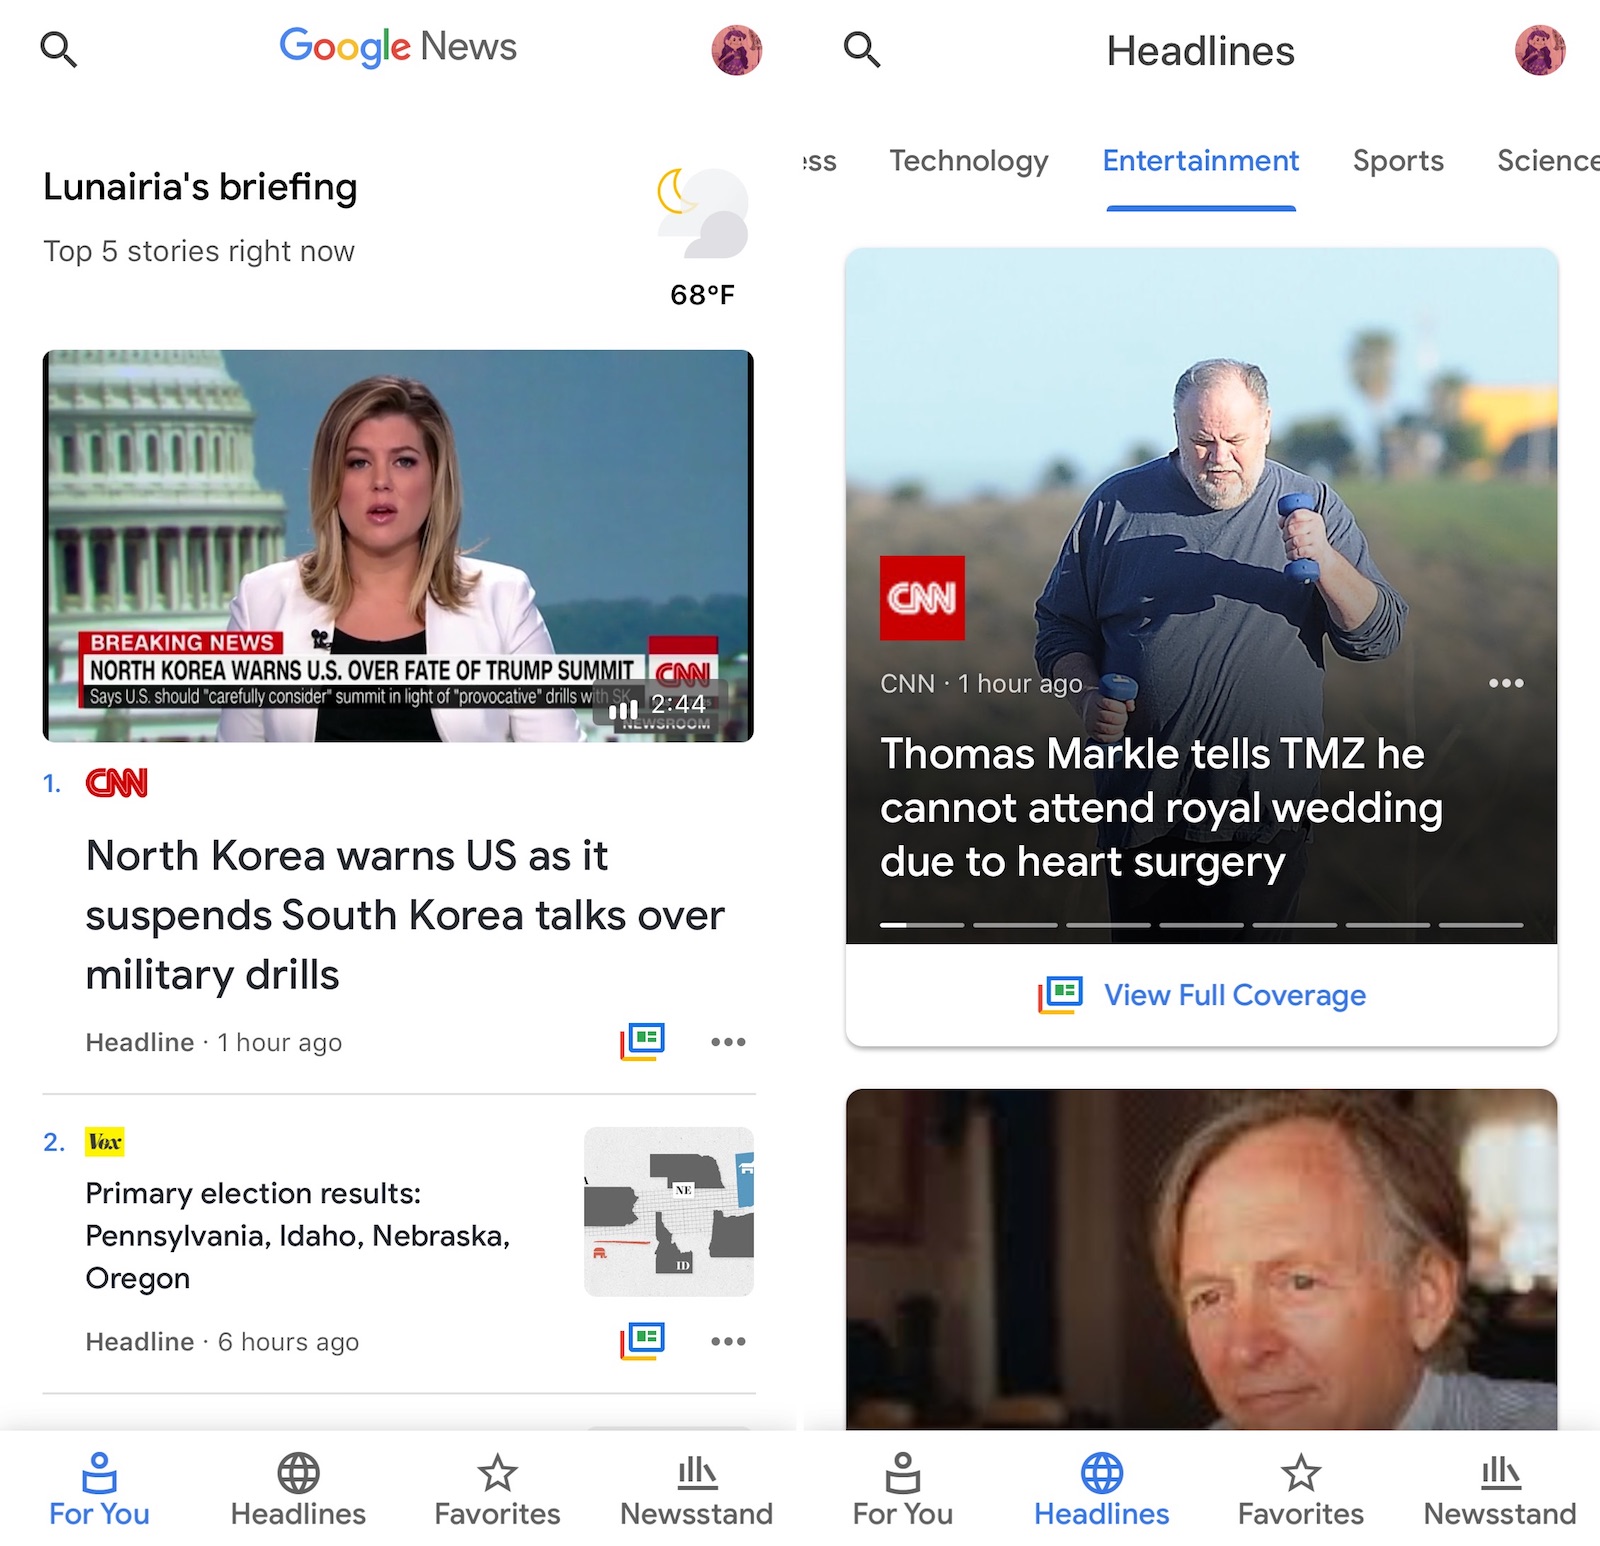 Google News briefing